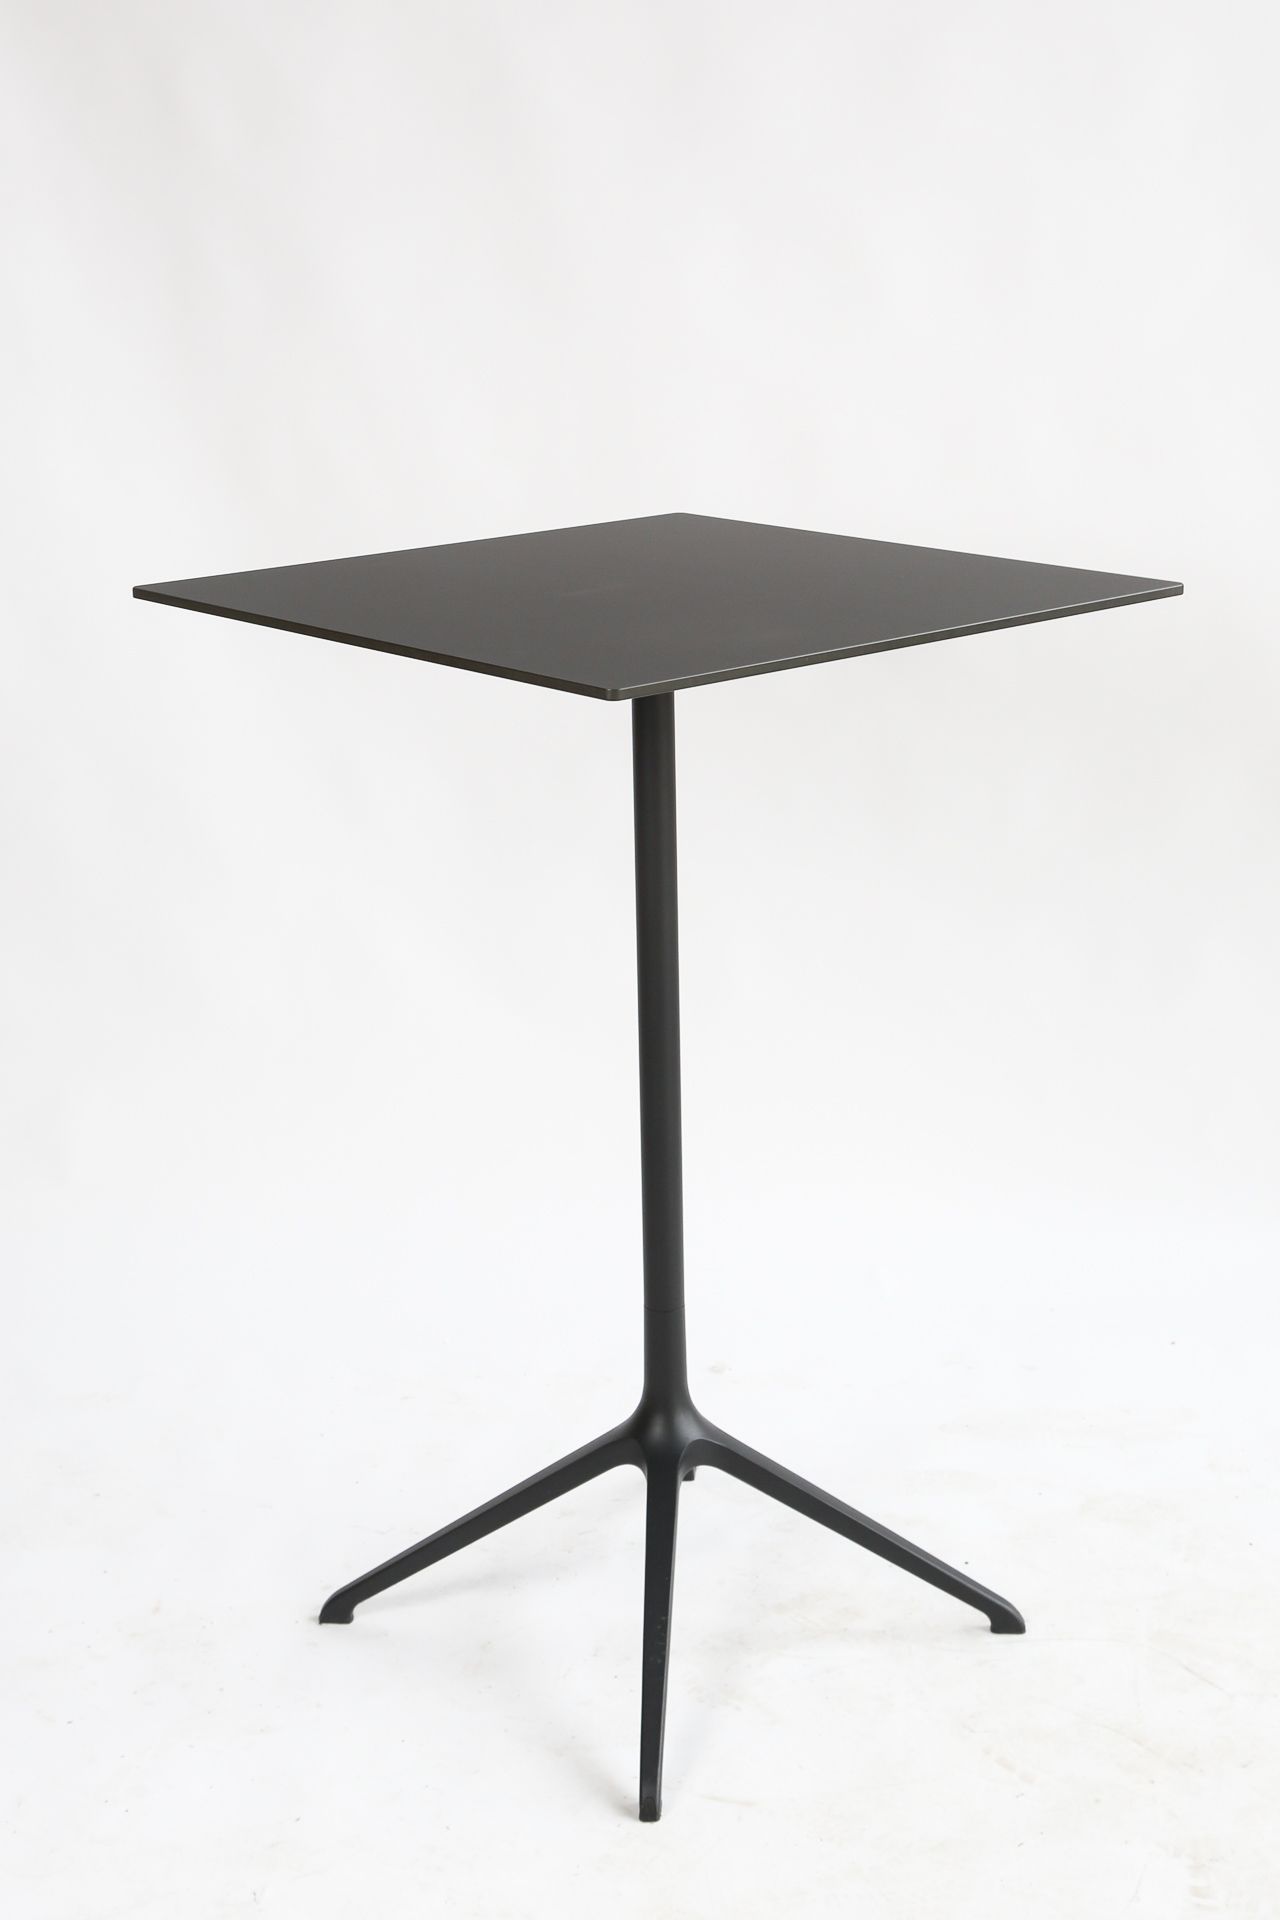 Null KRISTALIA, 可折叠大象桌 - 黑色, 铝制中心腿涂黑漆9004

黑色菲尼克斯上衣

适用于户外使用

高：106厘米，宽：69厘米，深：6&hellip;